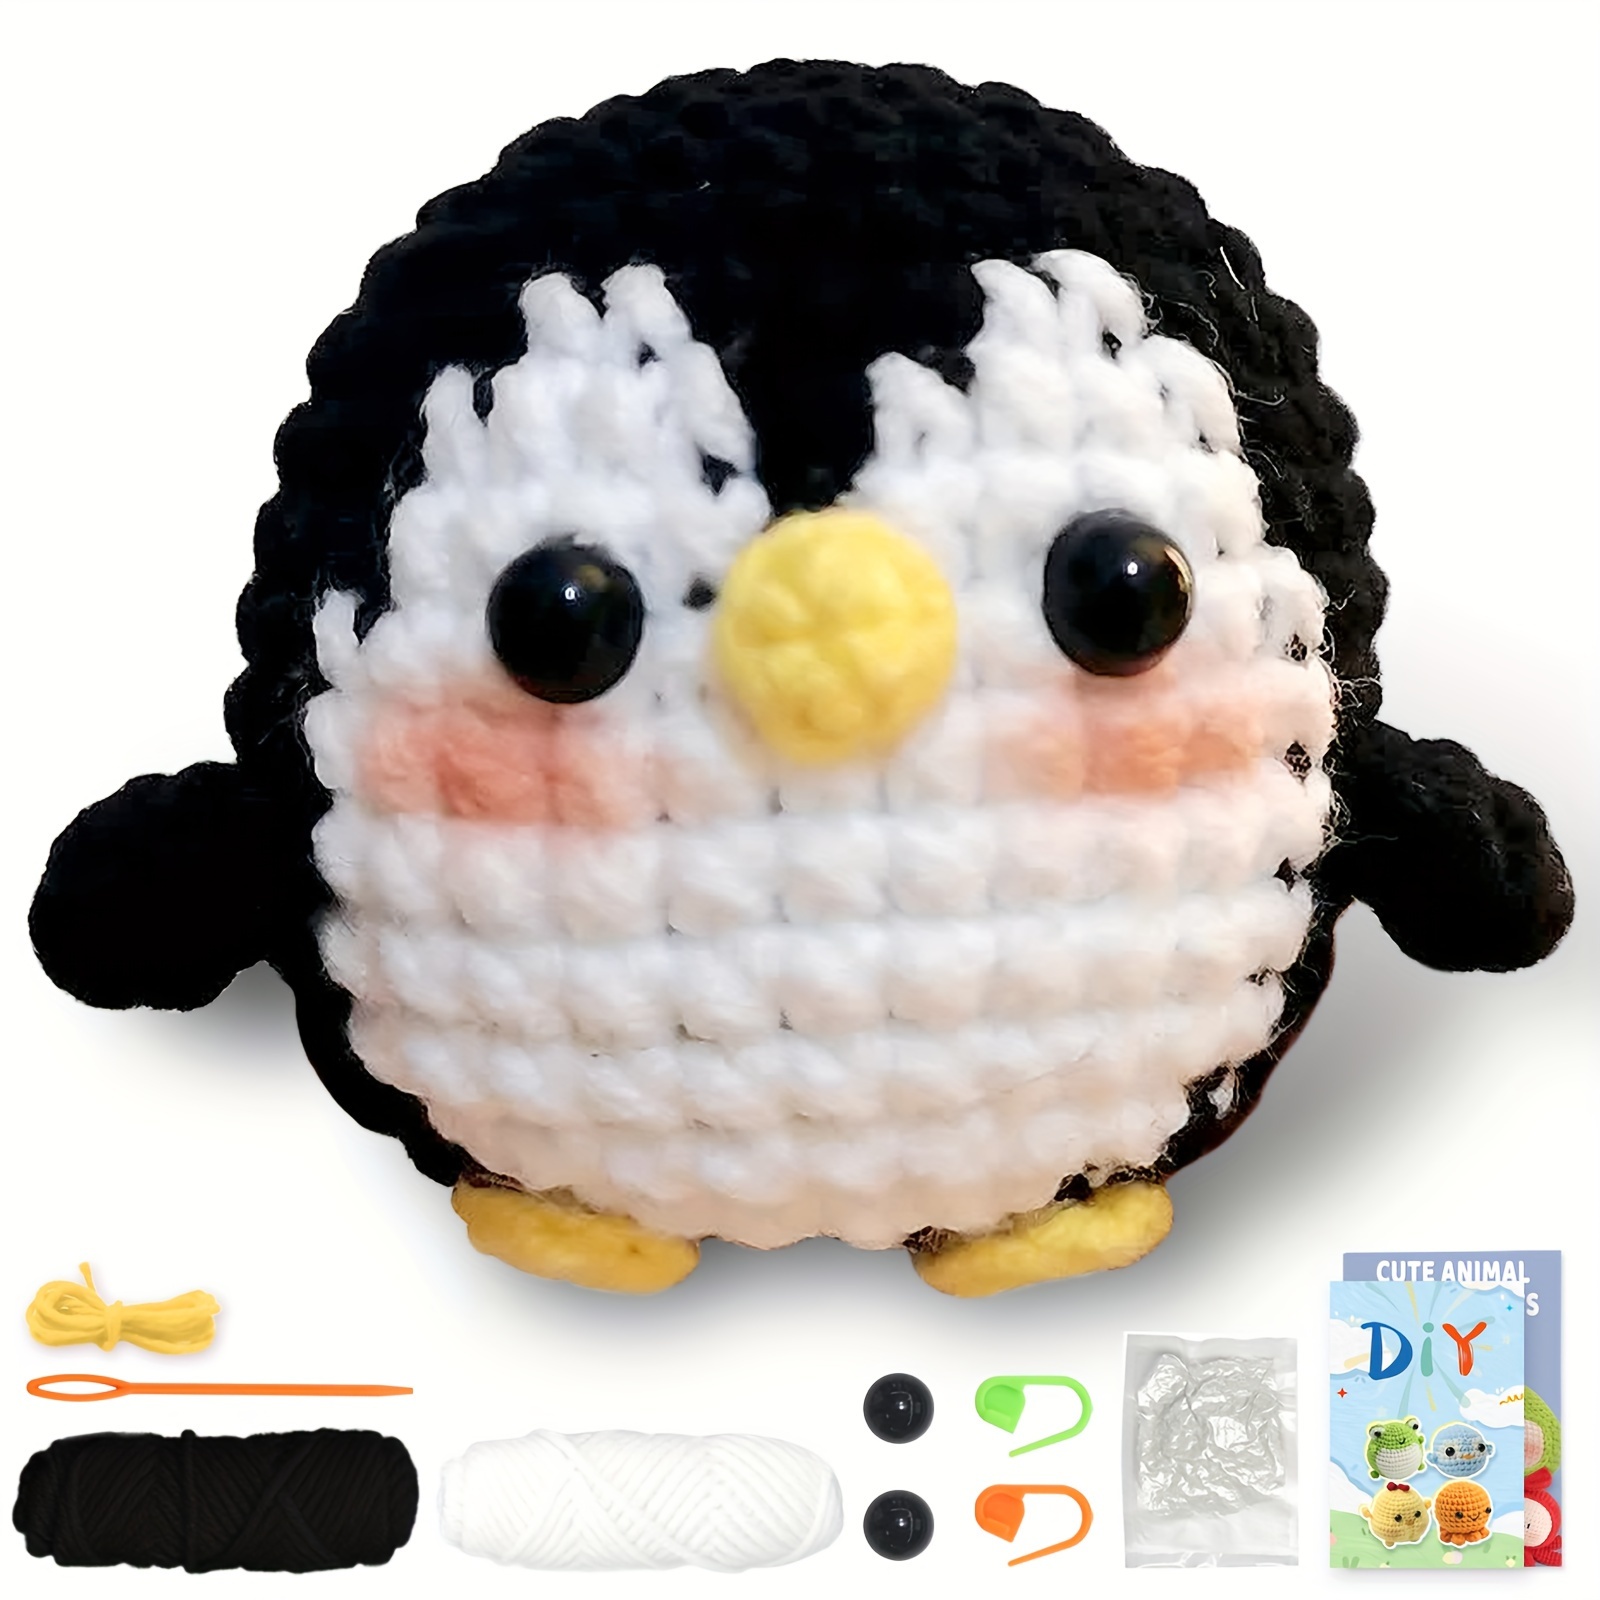 

1set New Crochet Material Package Contains English Instruction Manual, Beginner Crochet Yarn Kit For Adults, Knitting Handmade Diy Cartoon Doll For Beginners Penguin